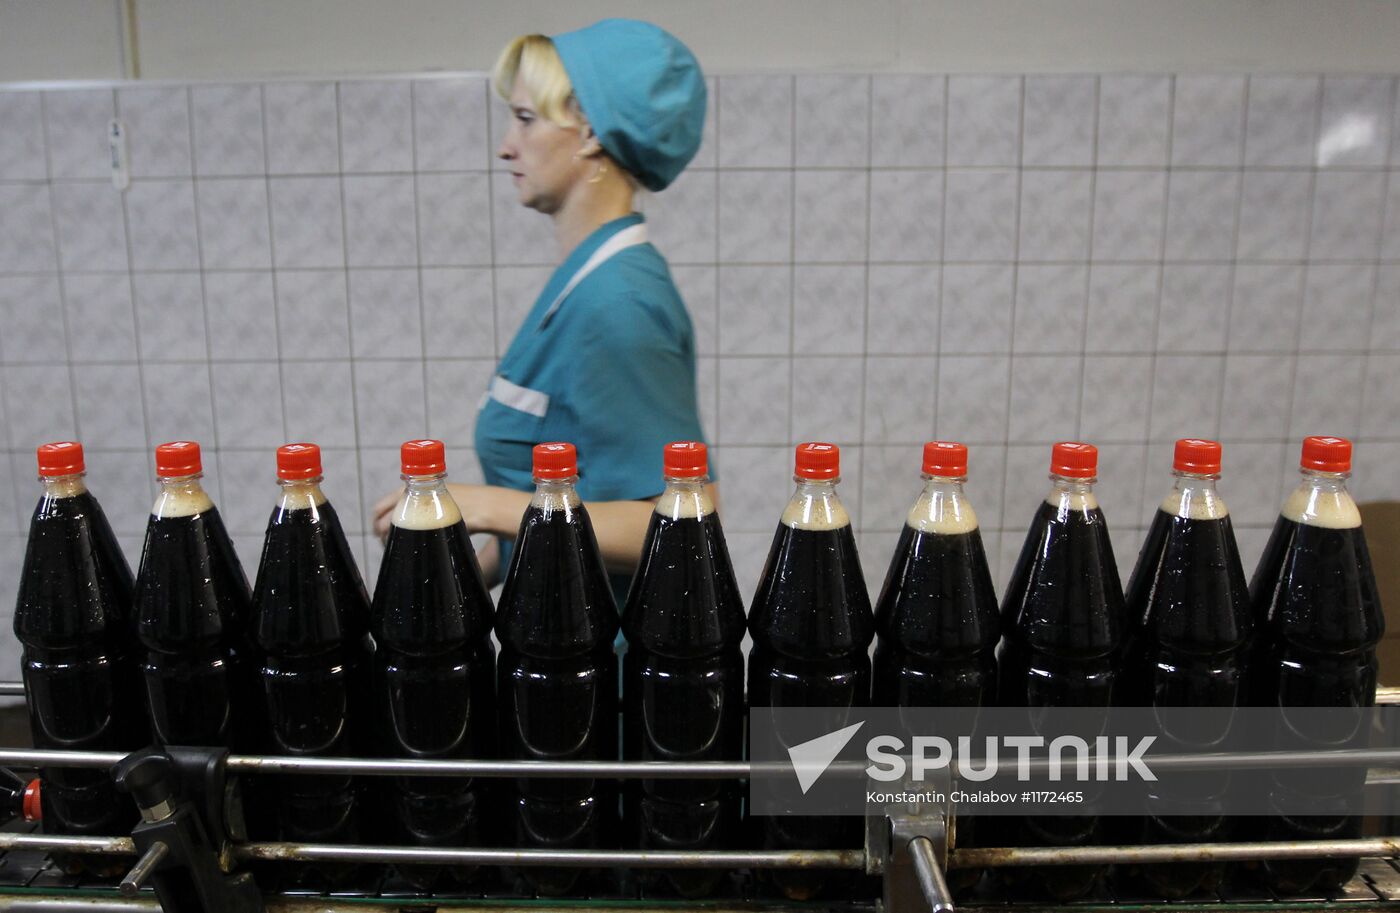 "Uspolon" soft drinks company factory